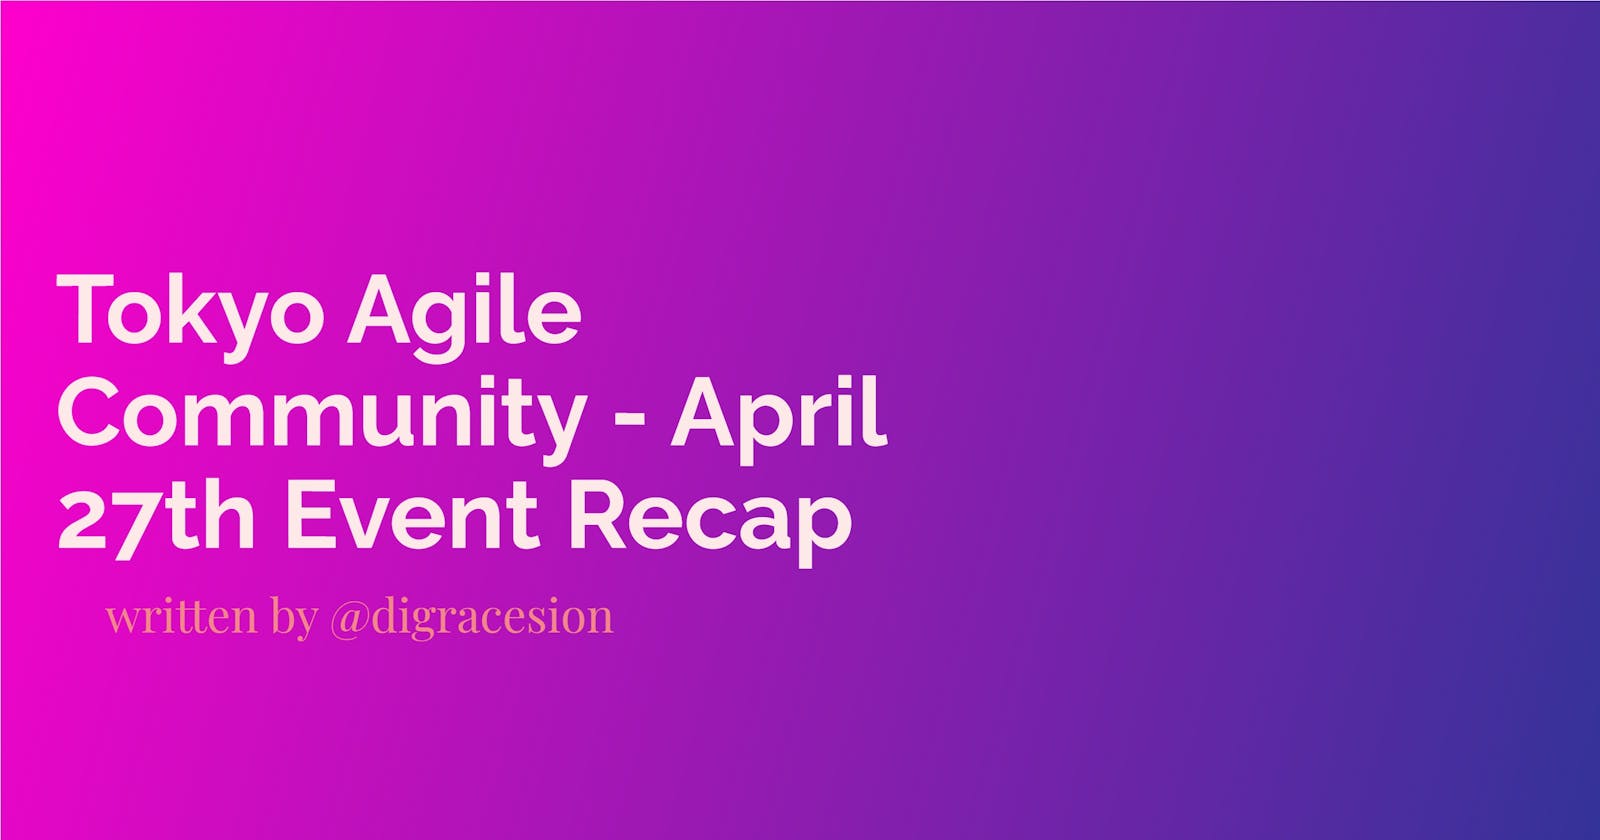 Tokyo Agile Community - April 27th Event Recap